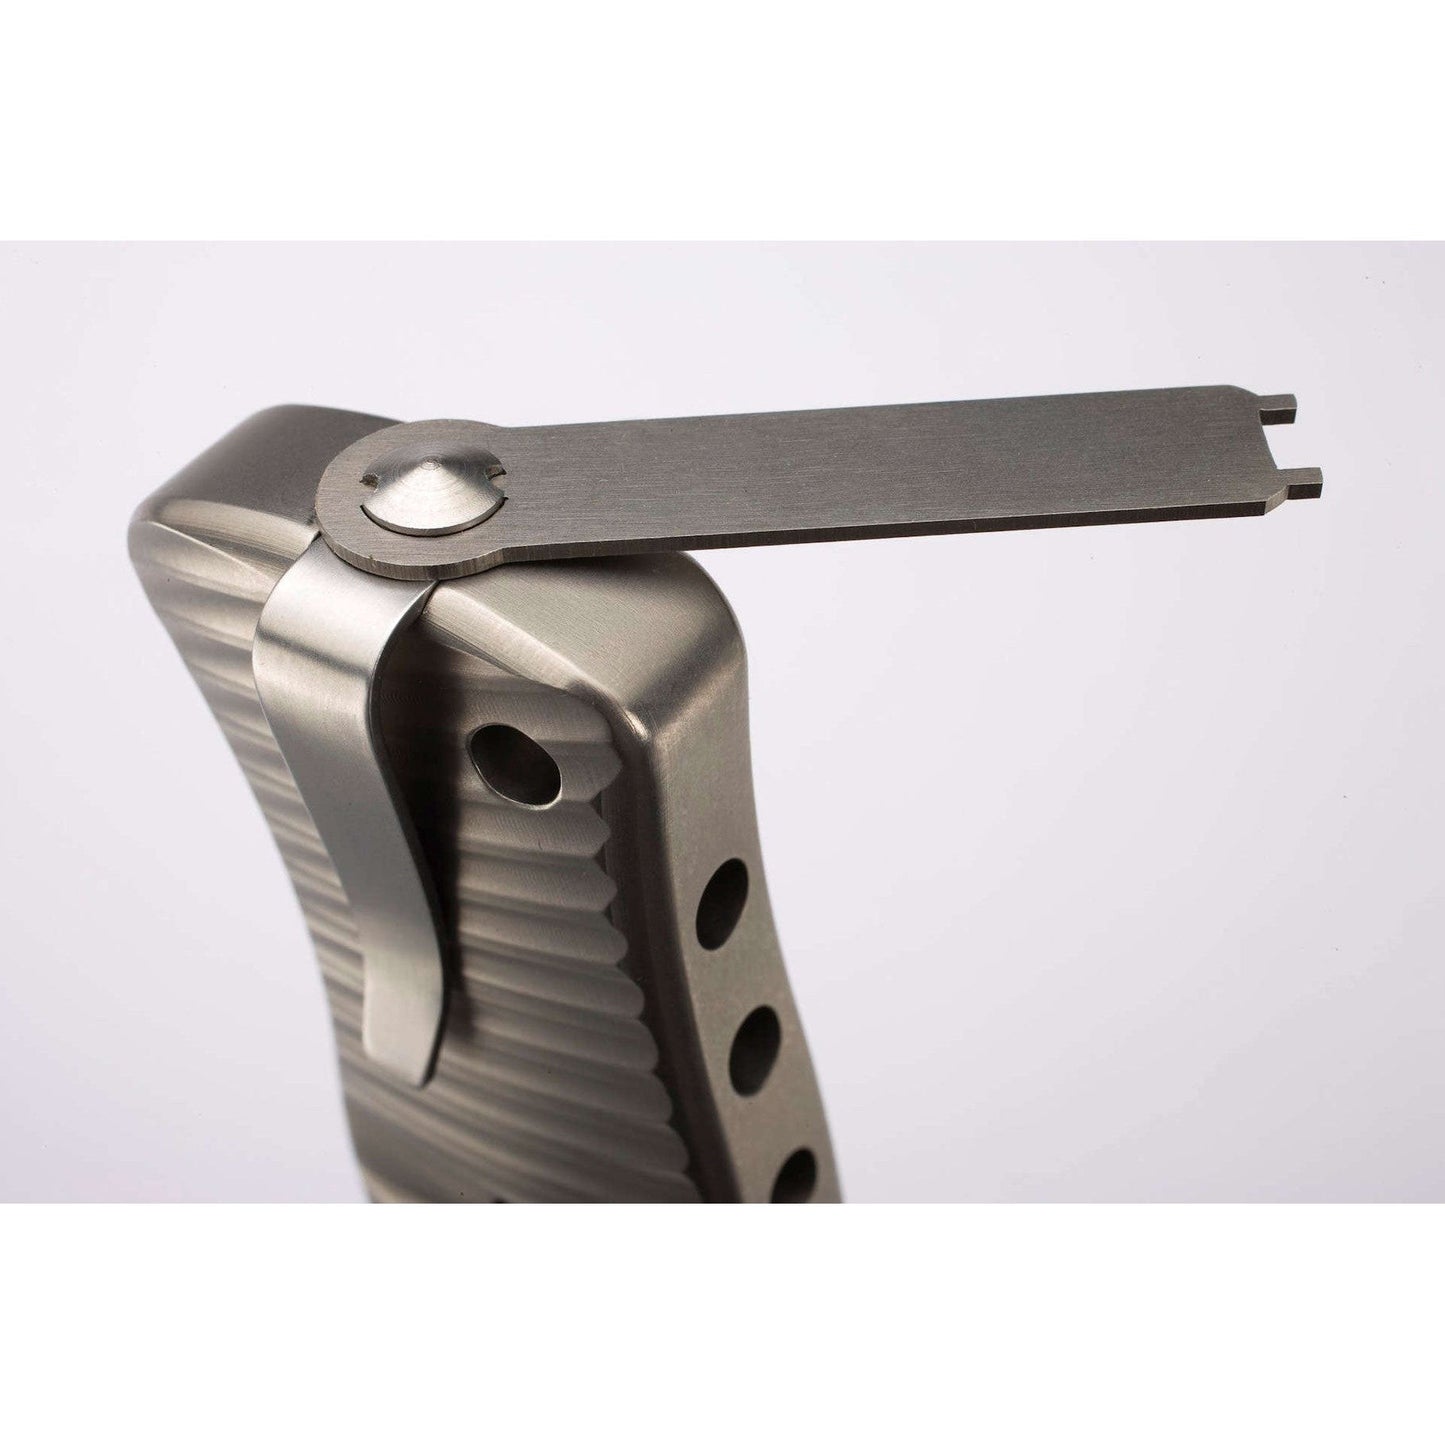 SR2 Titanium matt bronze-lionSTEEL-OnlyKnives